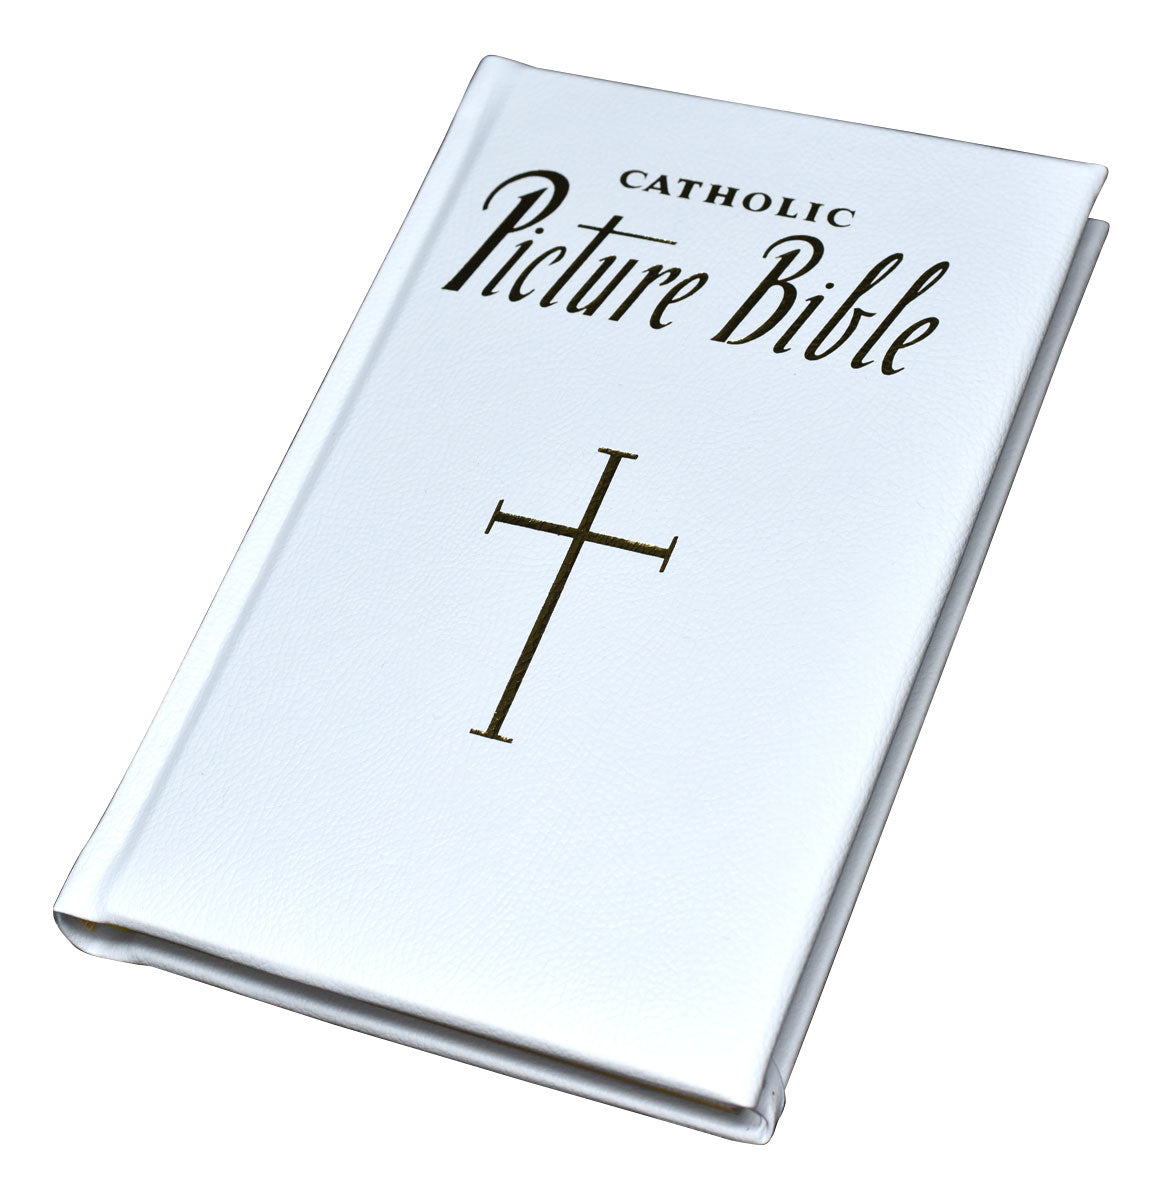 New Catholic Picture Bible (White)